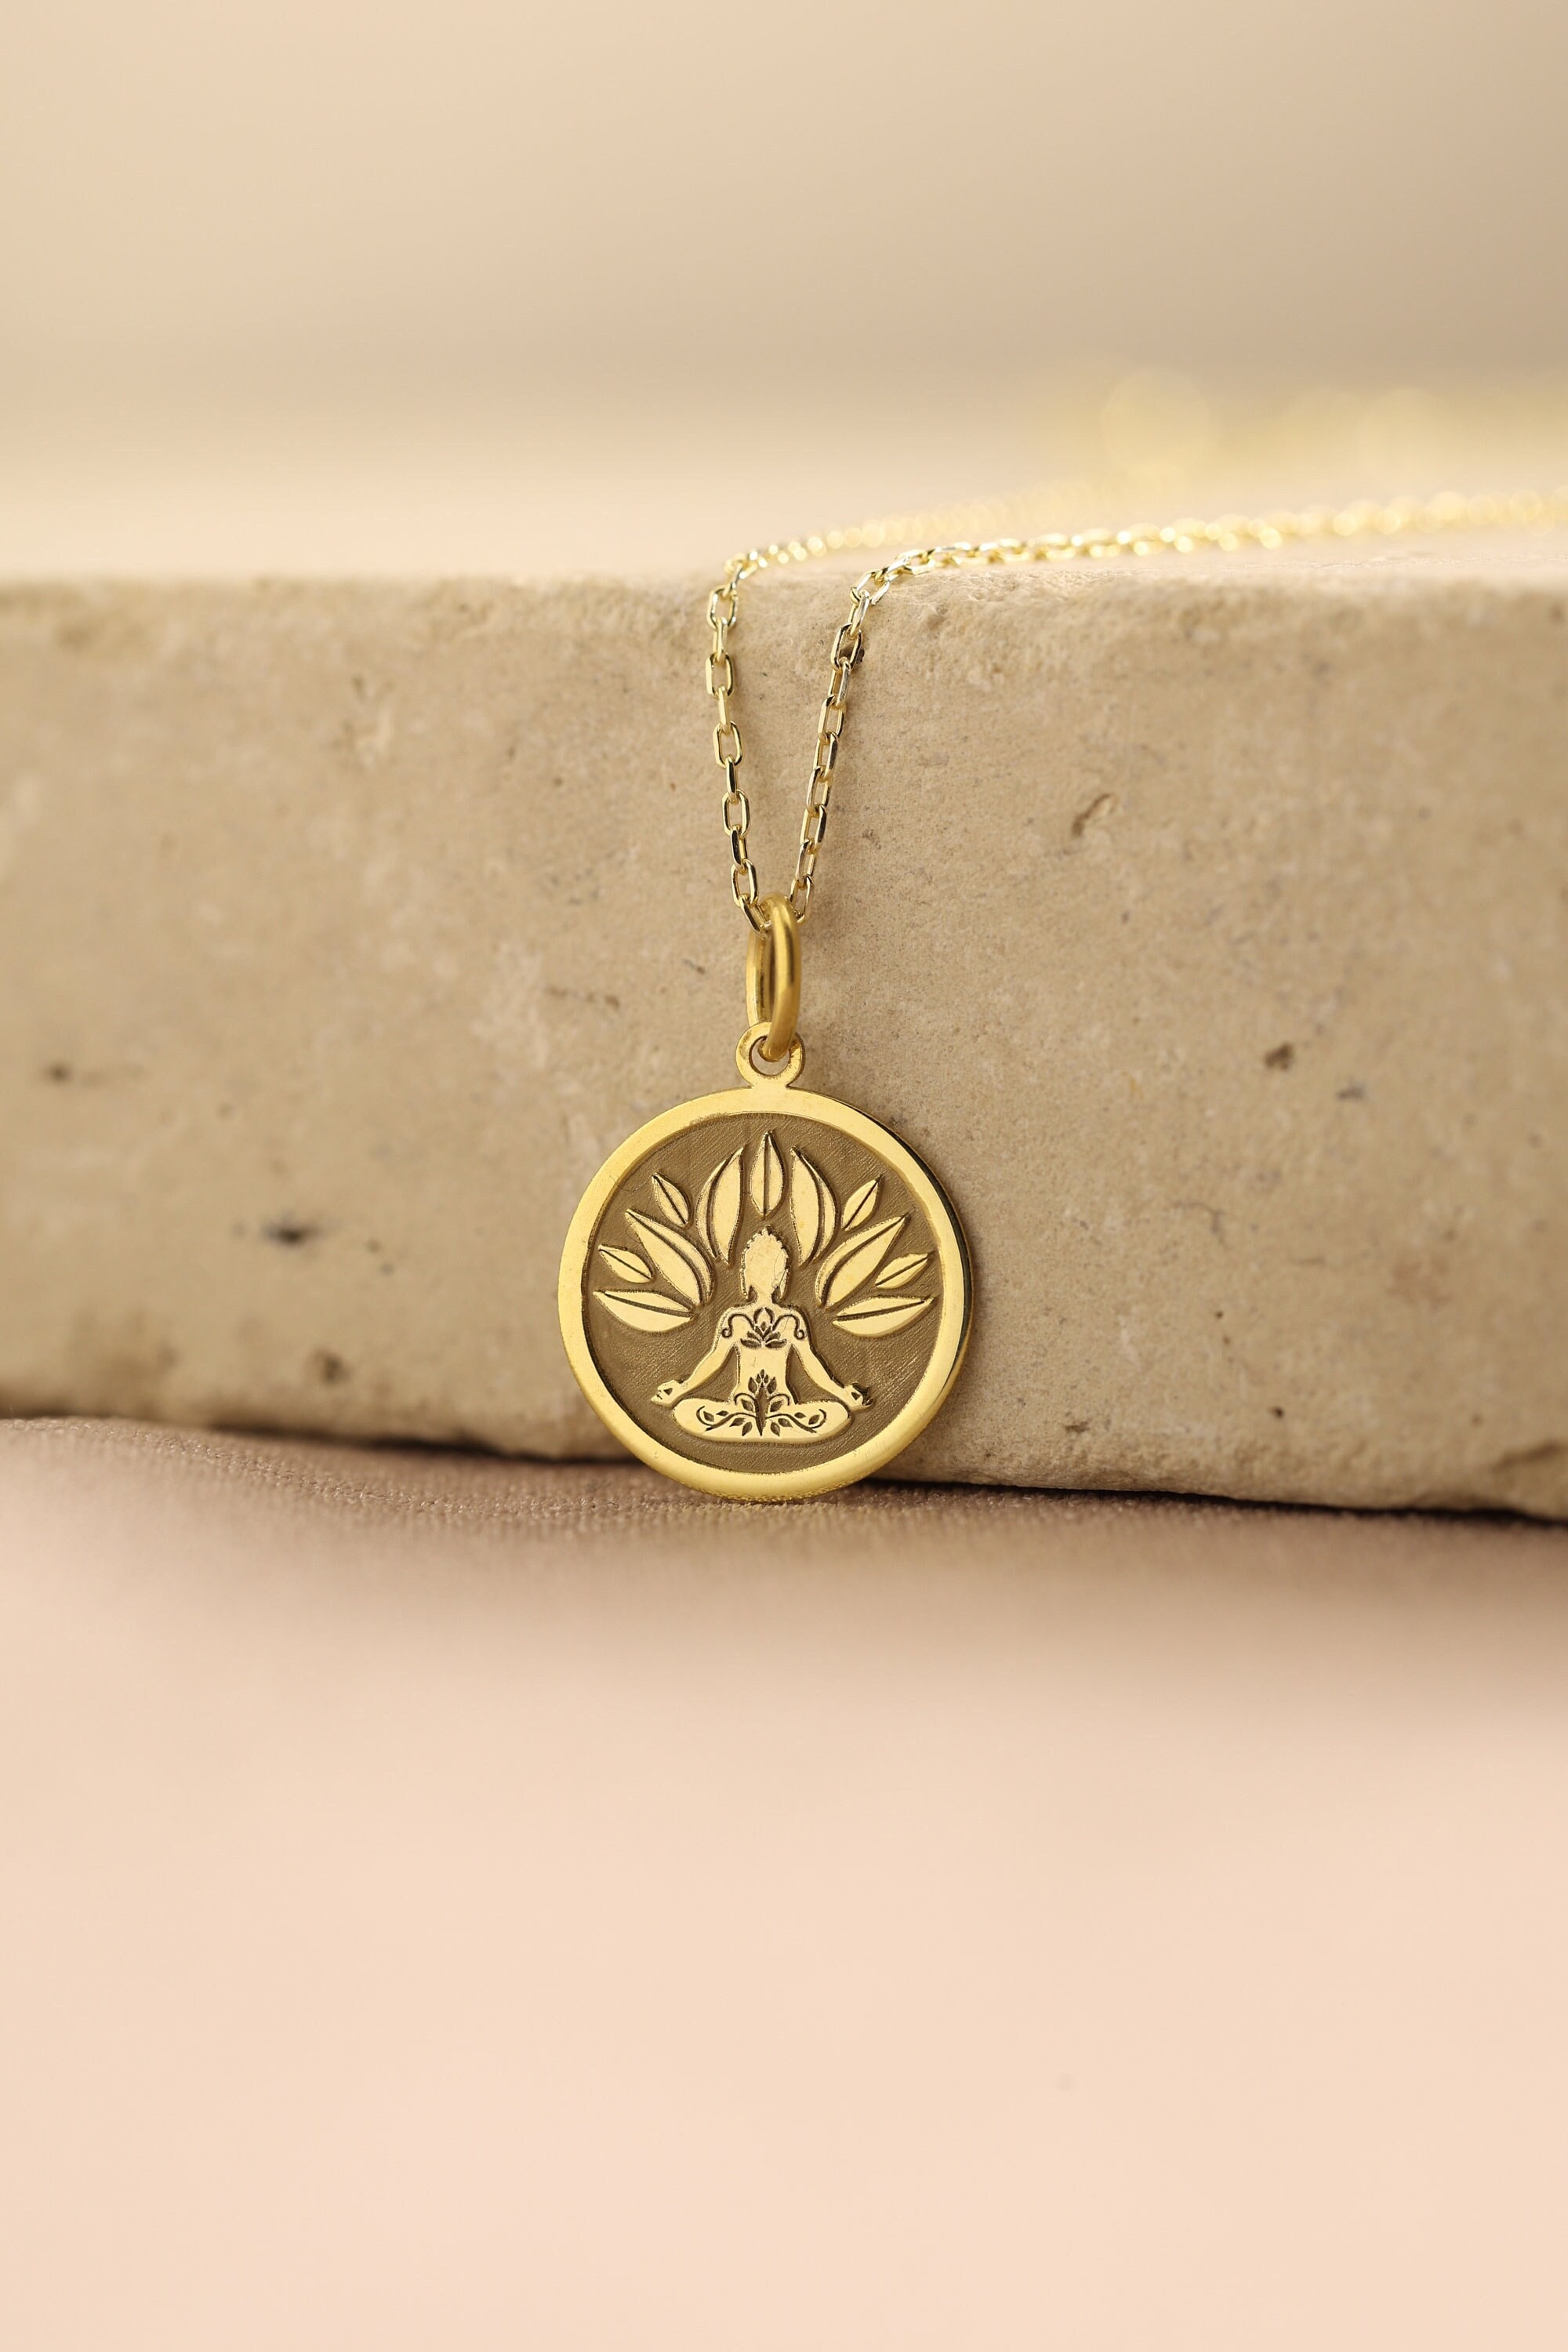 Bronze lotus charms, Nickel free pendant, Yoga chakra jewelry making